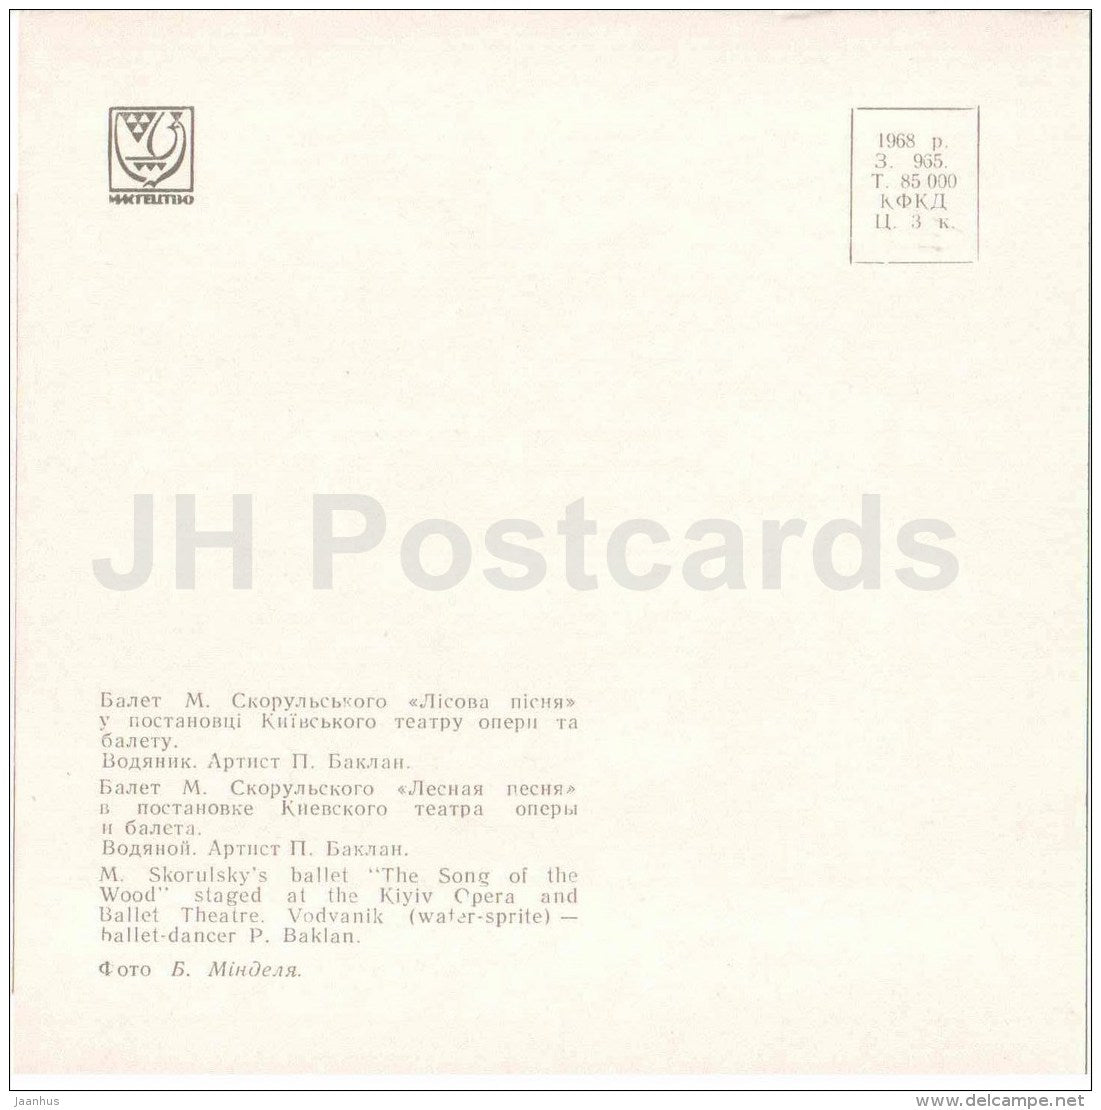 Vodvanik , P. Baklan - The Song of the Wood by Skorulsky - Ballet - 1968 - Ukraine USSR - unused - JH Postcards